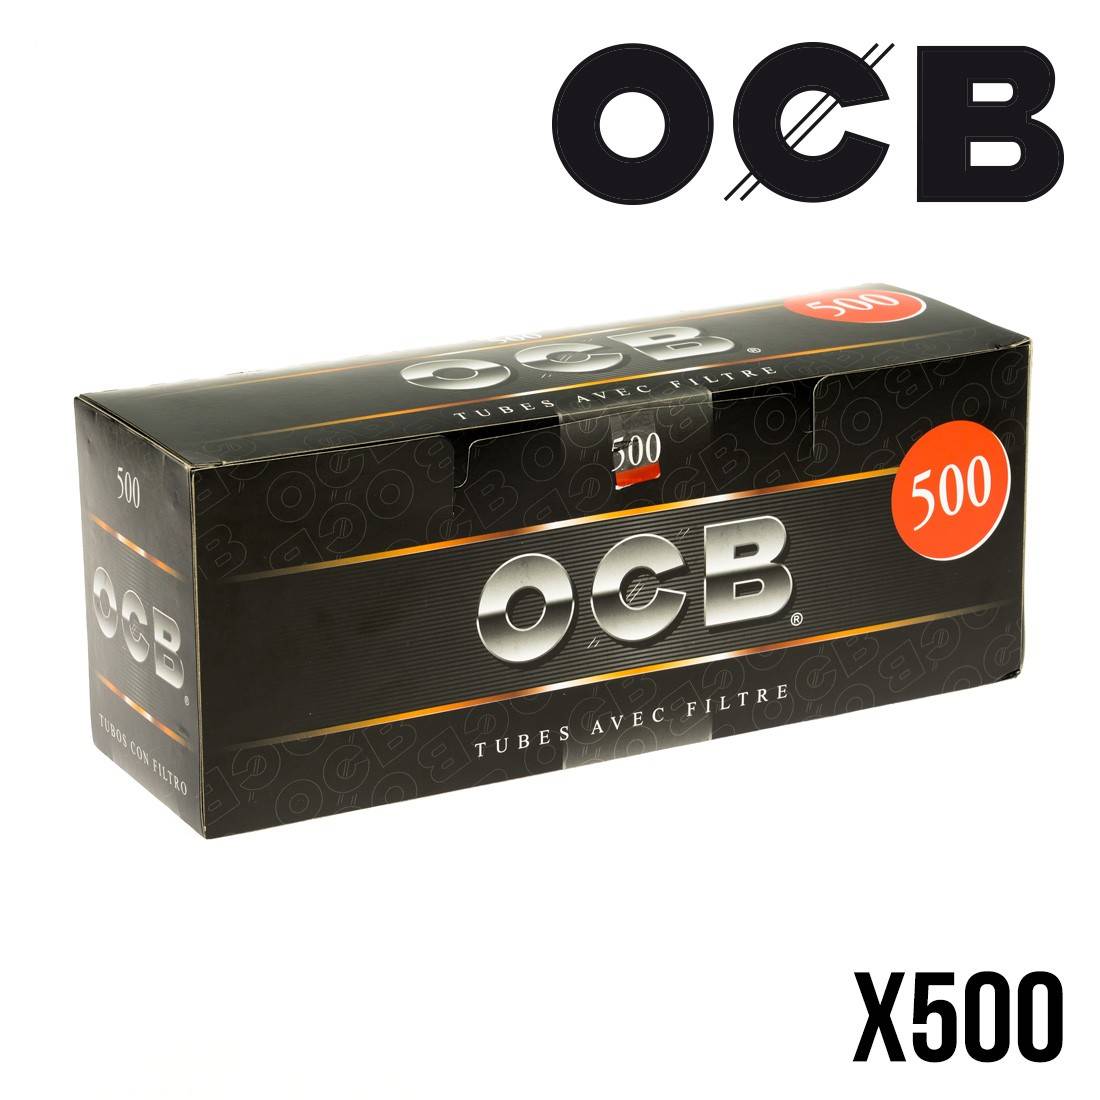 OCB tubes 500 